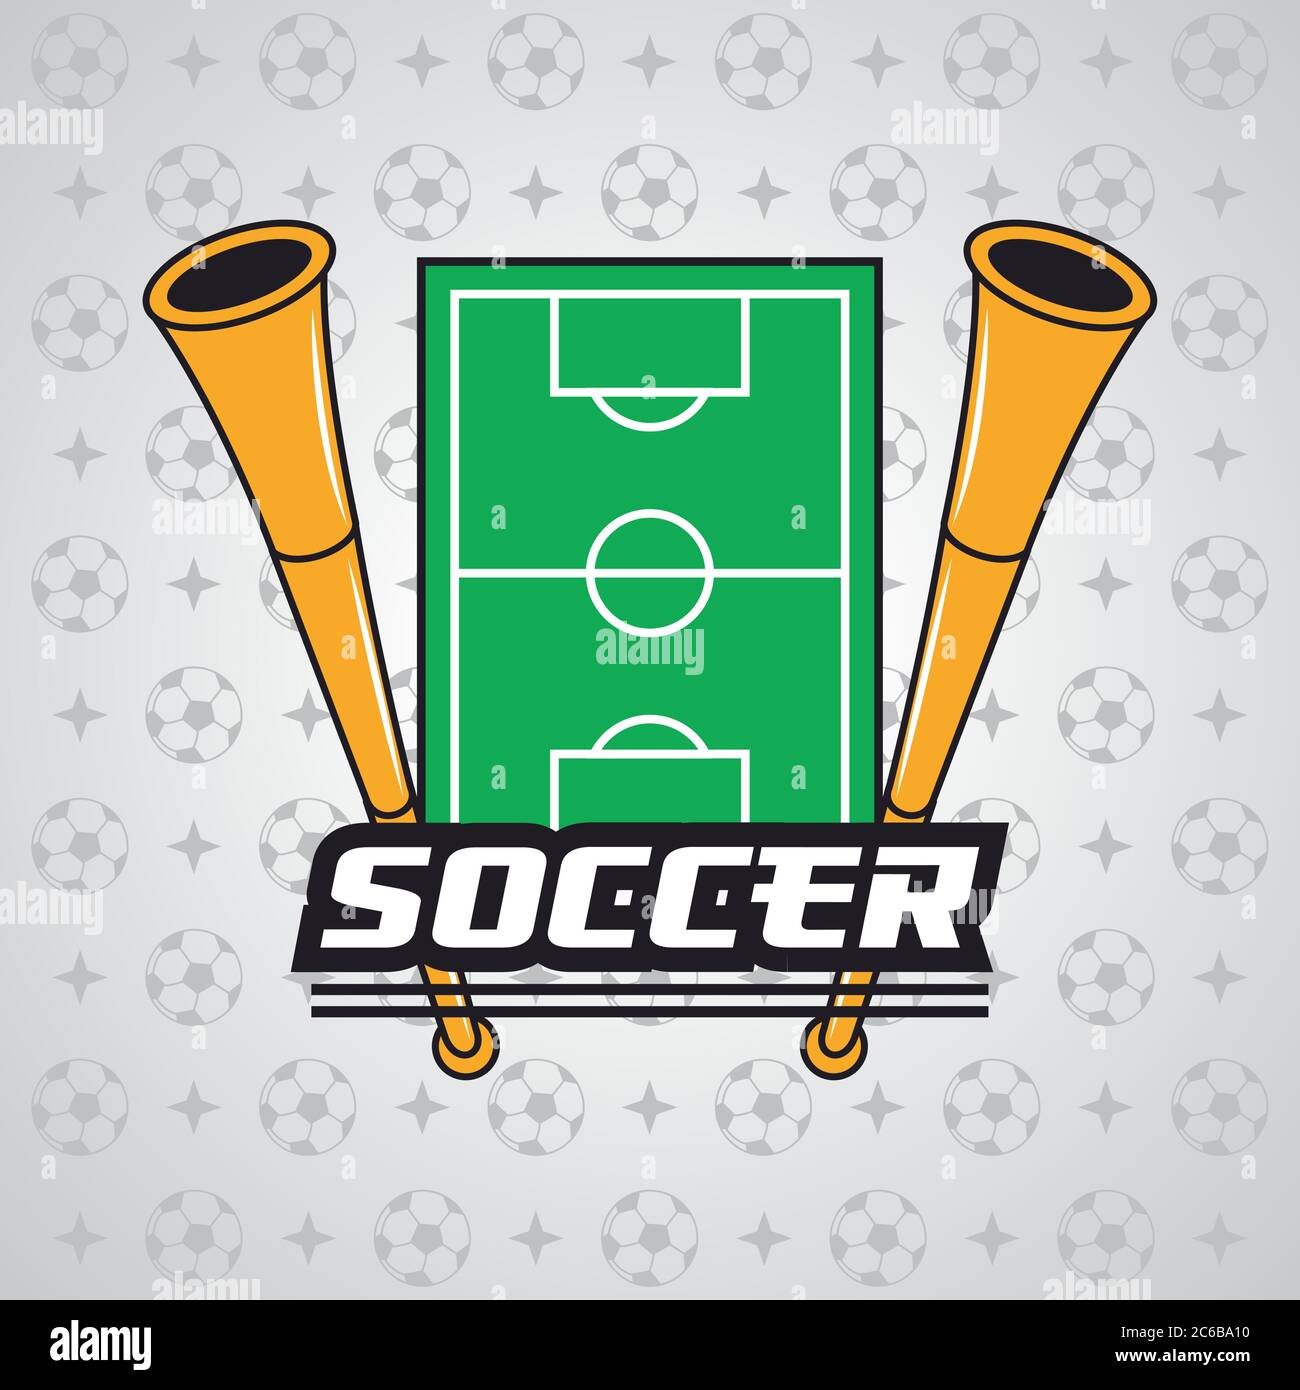 football soccer sport poster with cornets vector illustration design Stock Vector